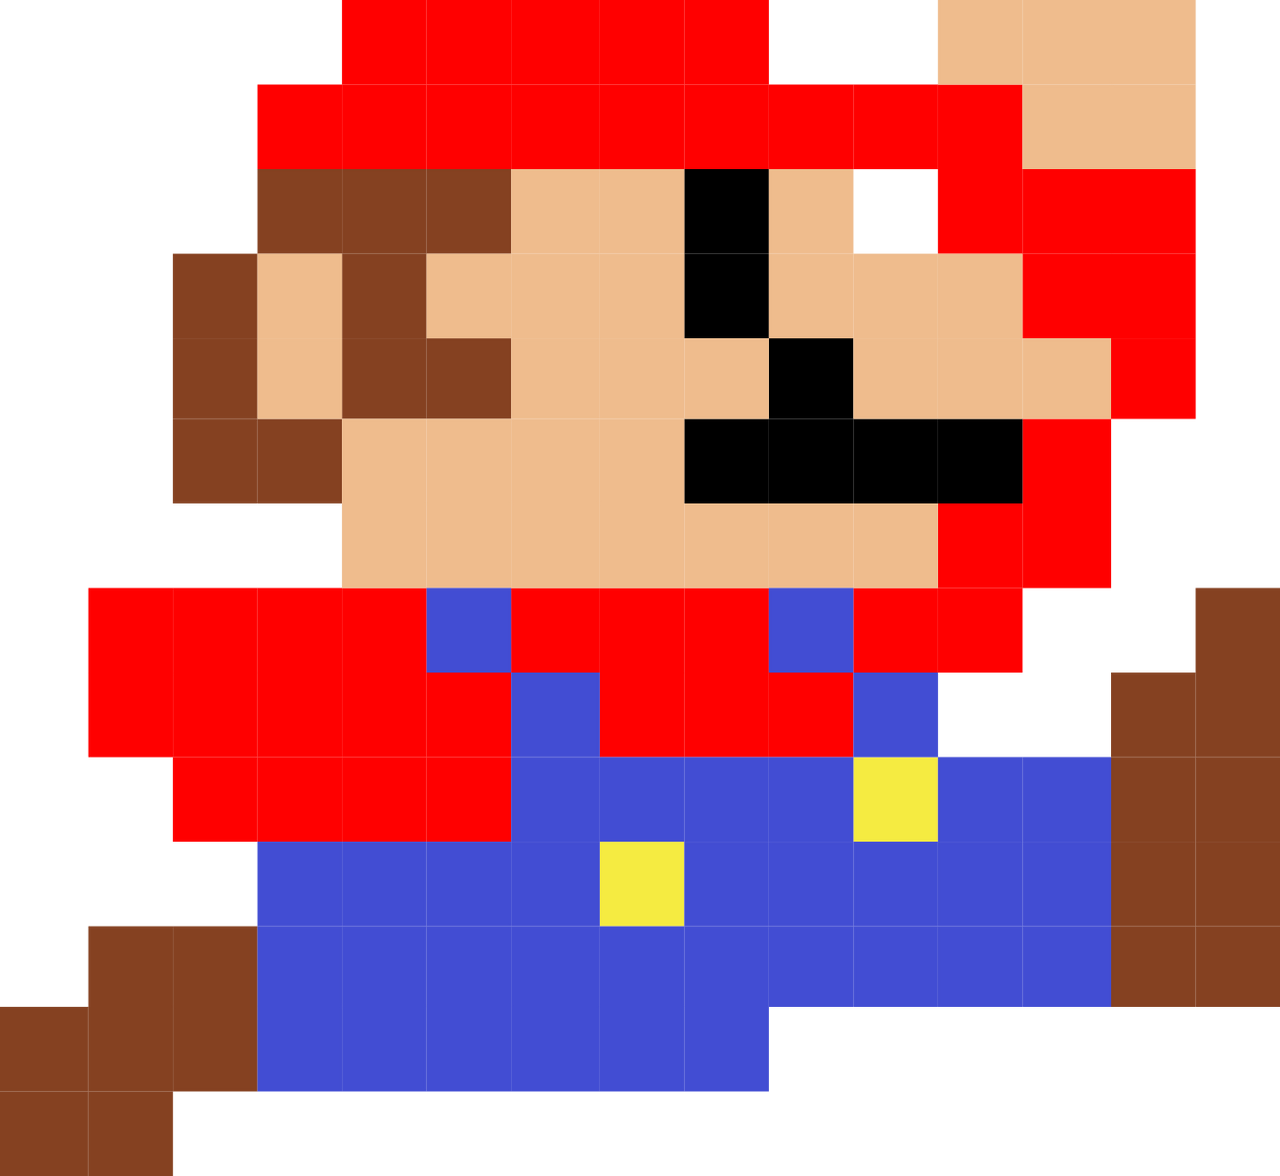 Mario bros 8. Луиджи Марио 8 бит. Марио пиксель персонажи. Марио БРОС 8 бит. Персонаж Марио пиксельный.